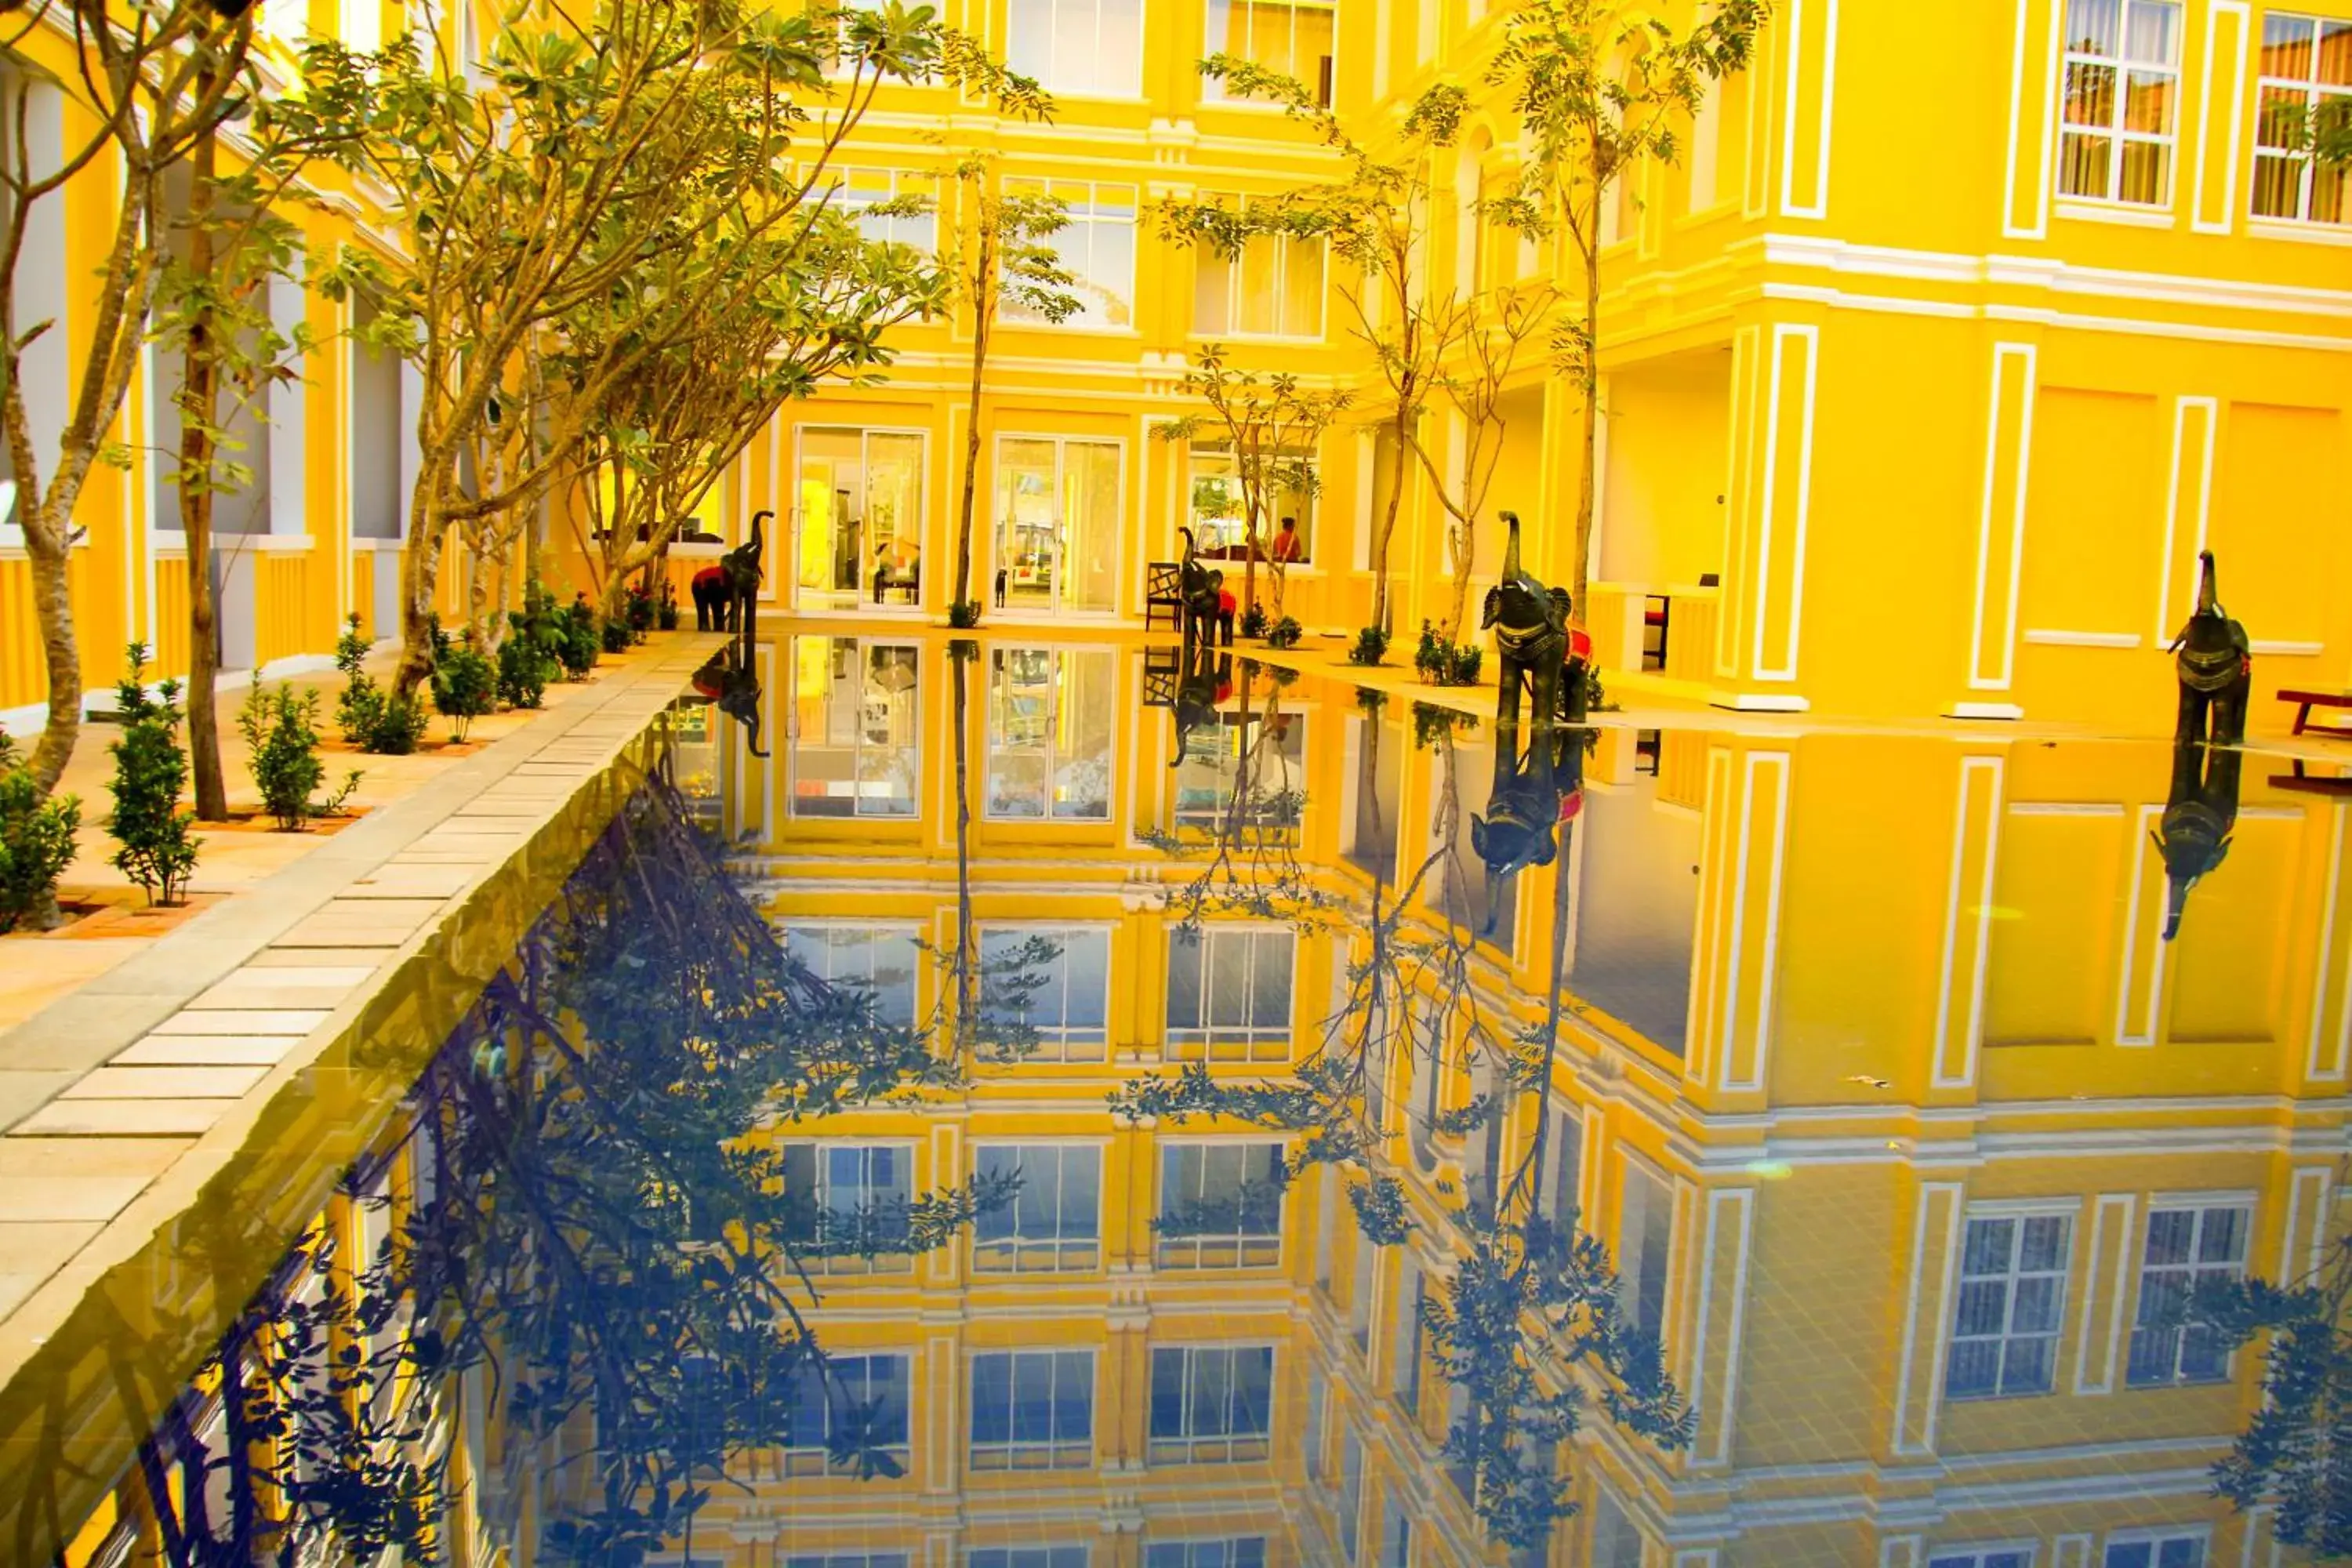 Swimming Pool in La Residence Watbo Hotel